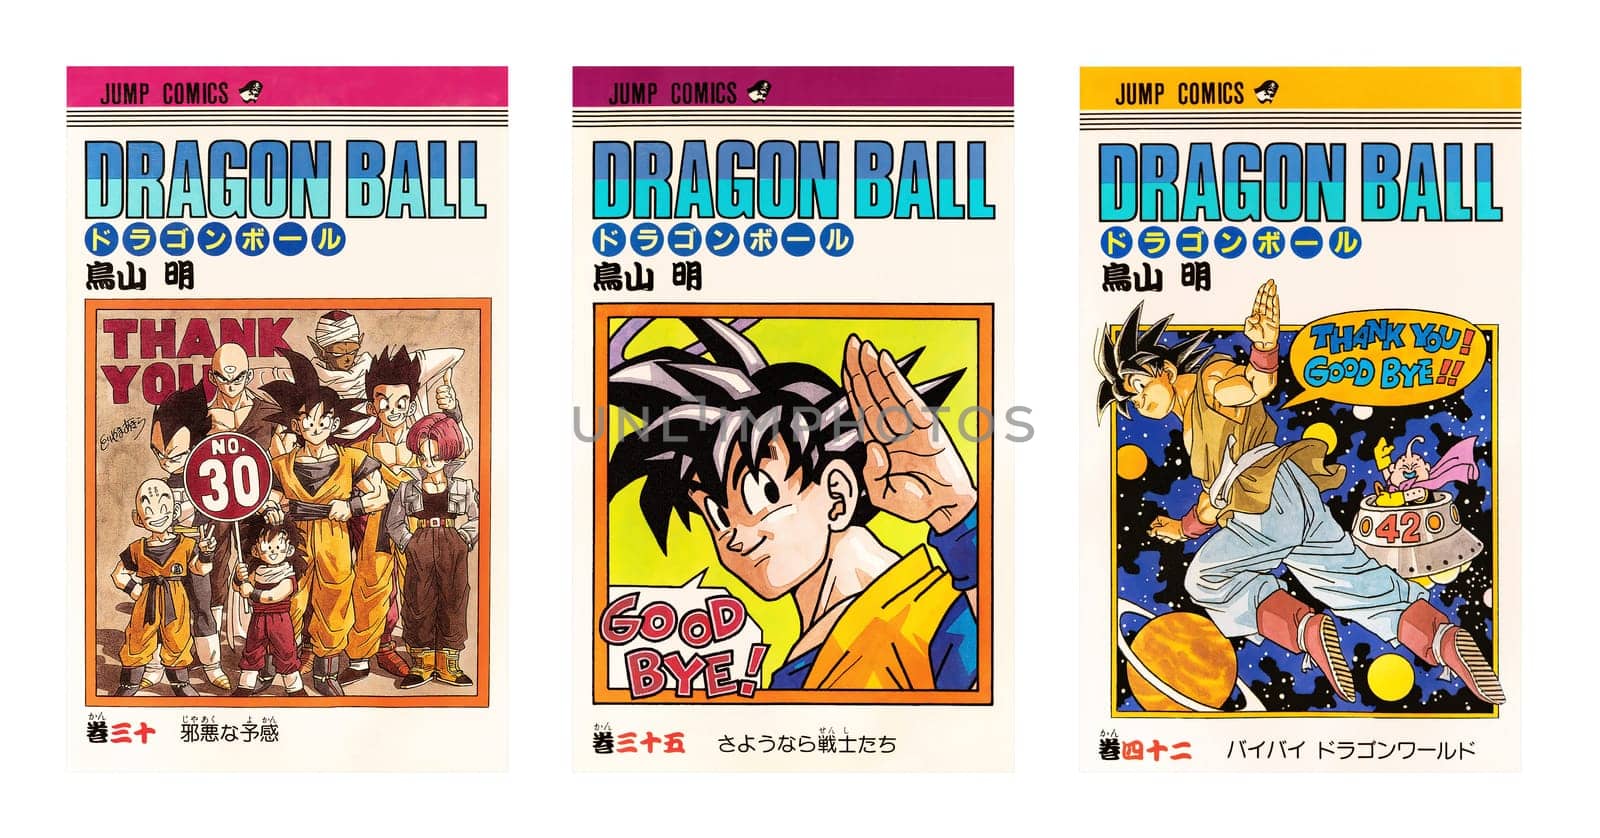 Covers of the Japanese manga Dragon Ball saying thank you and good bye! by kuremo